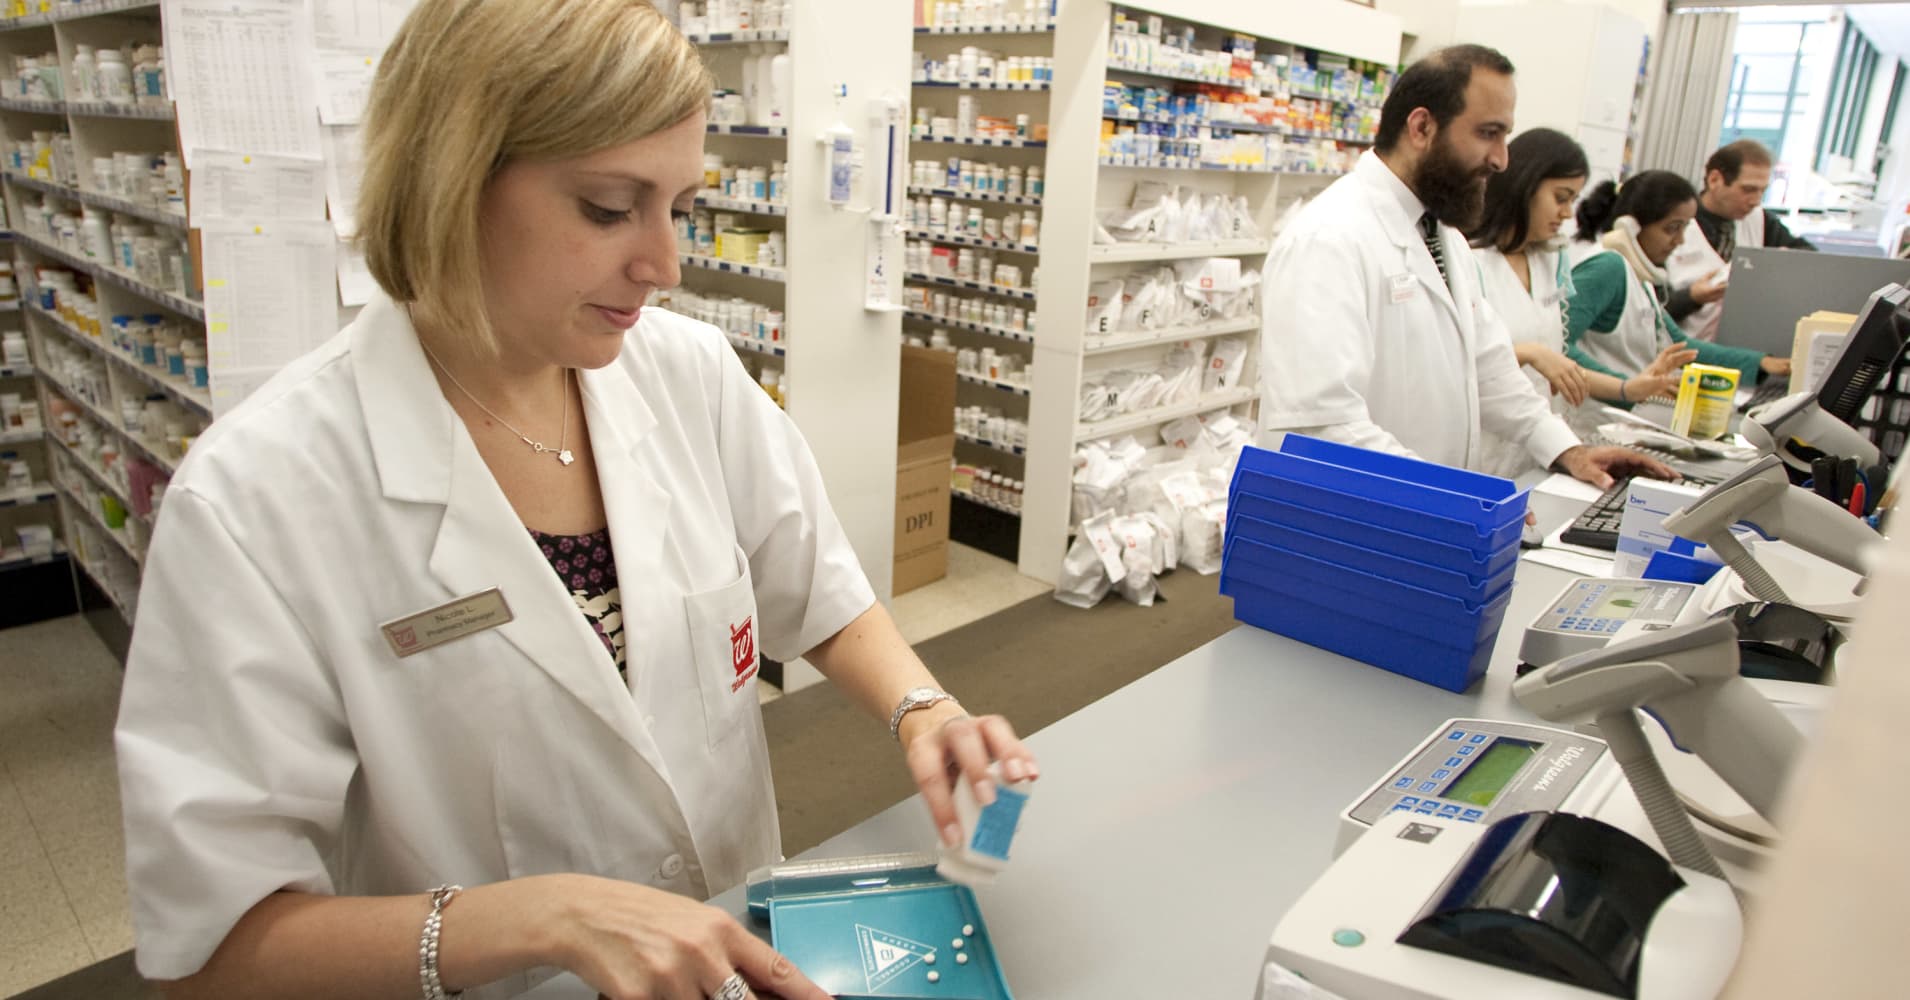 Pharmacy manager prepares a prescription at a Walgreens store.